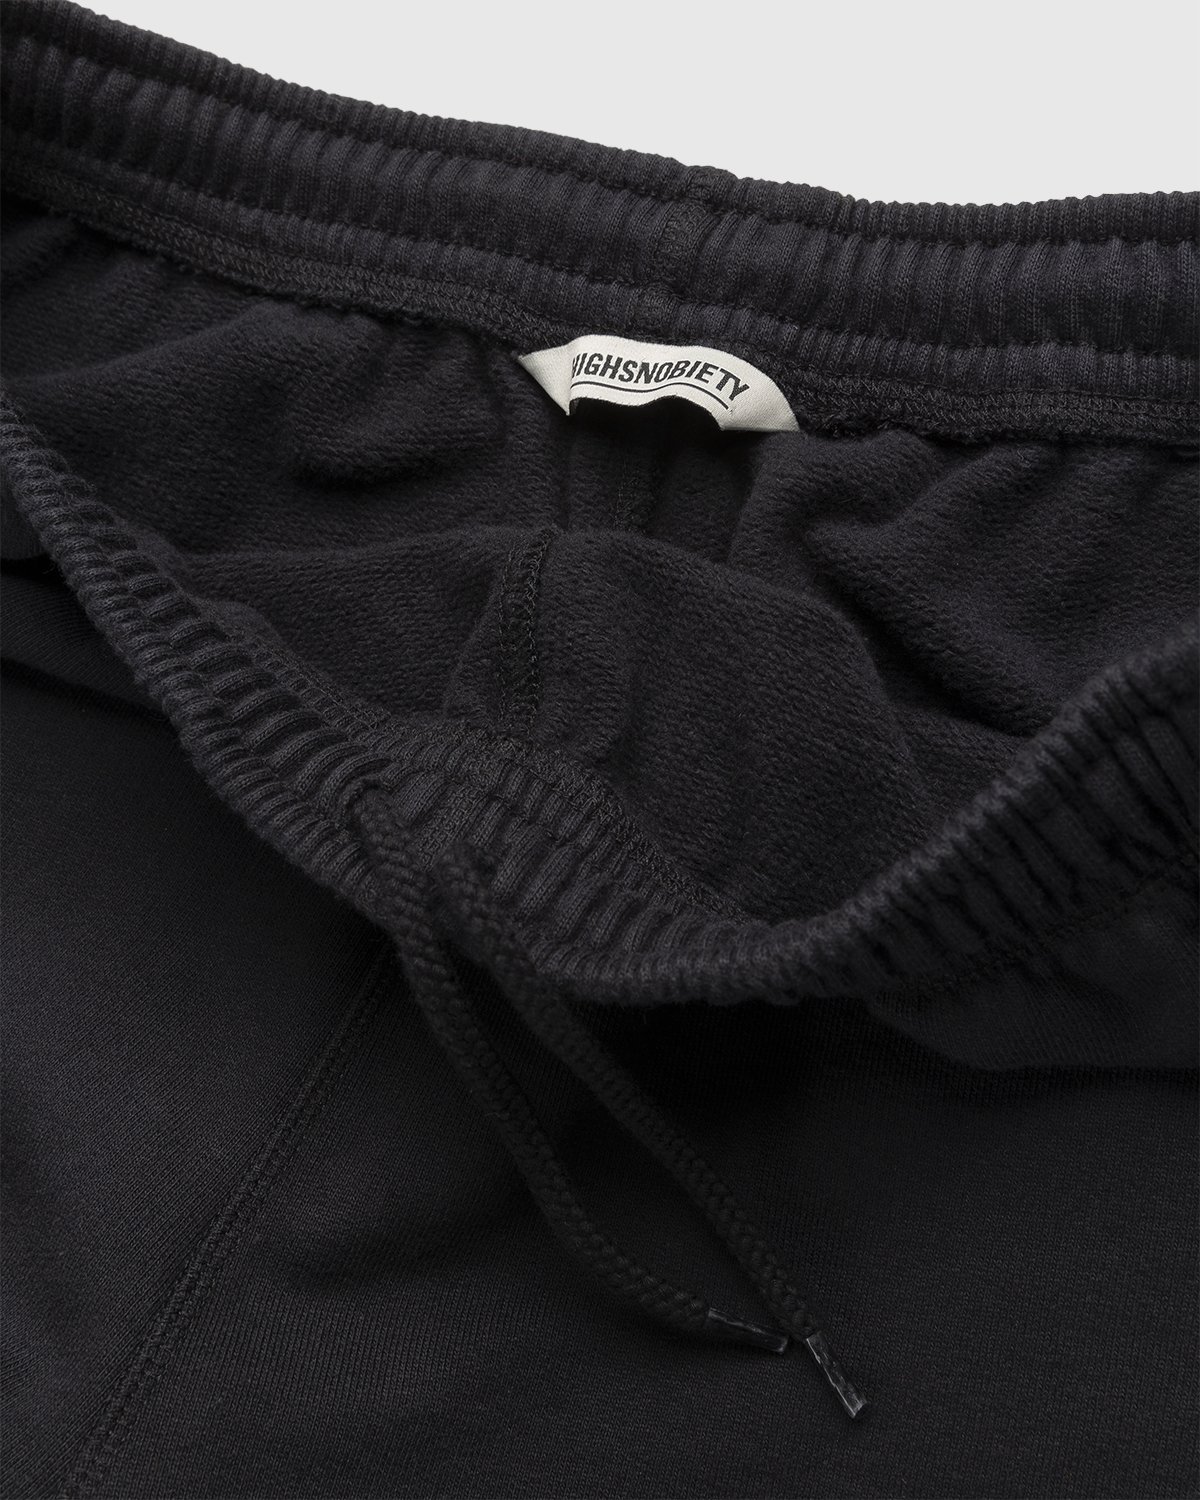 Highsnobiety - Logo Fleece Staples Pants Black - Clothing - Black - Image 5